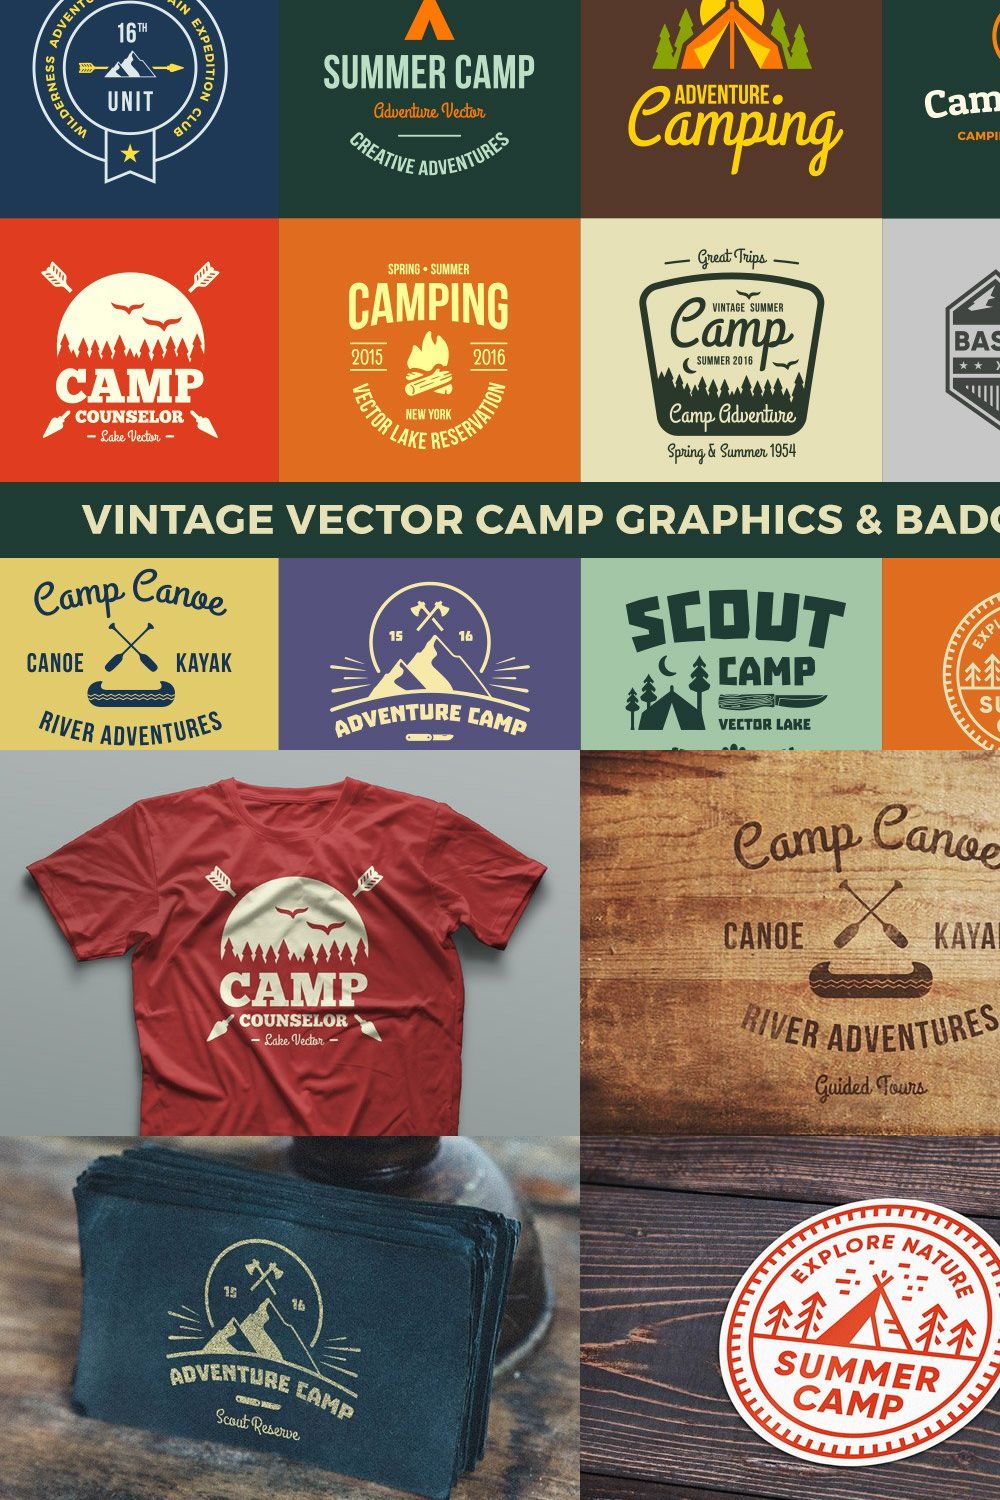 Vintage Vector Camp Graphics pinterest preview image.